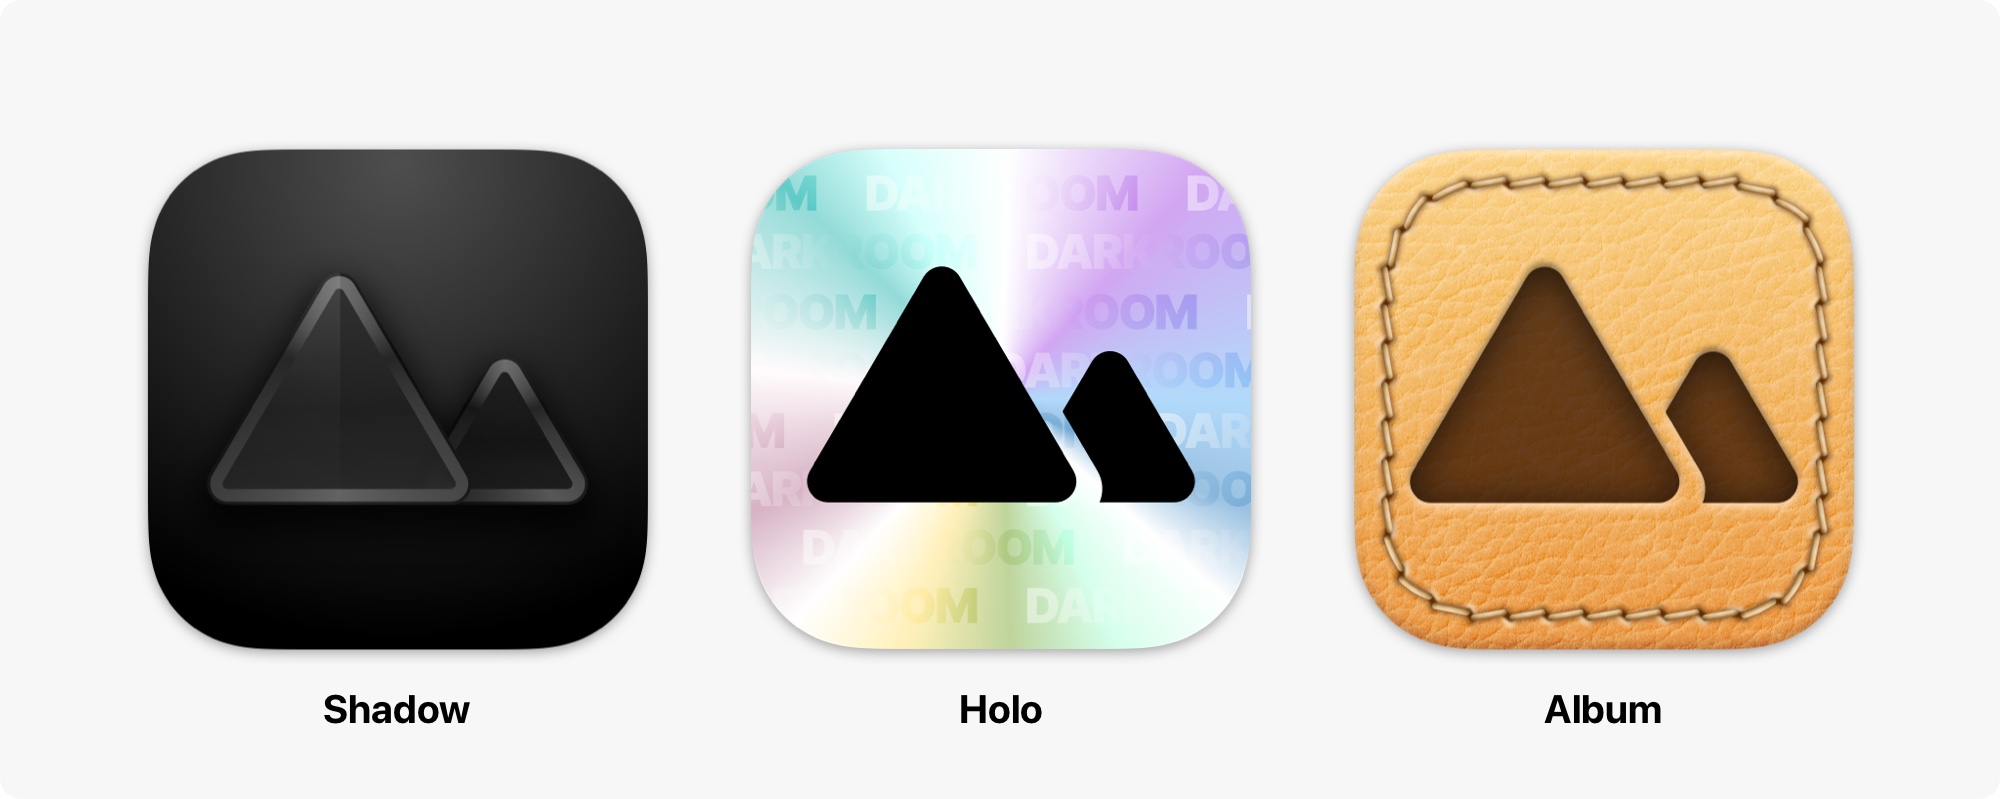 Three new app icons; Shade, Holo, and Album